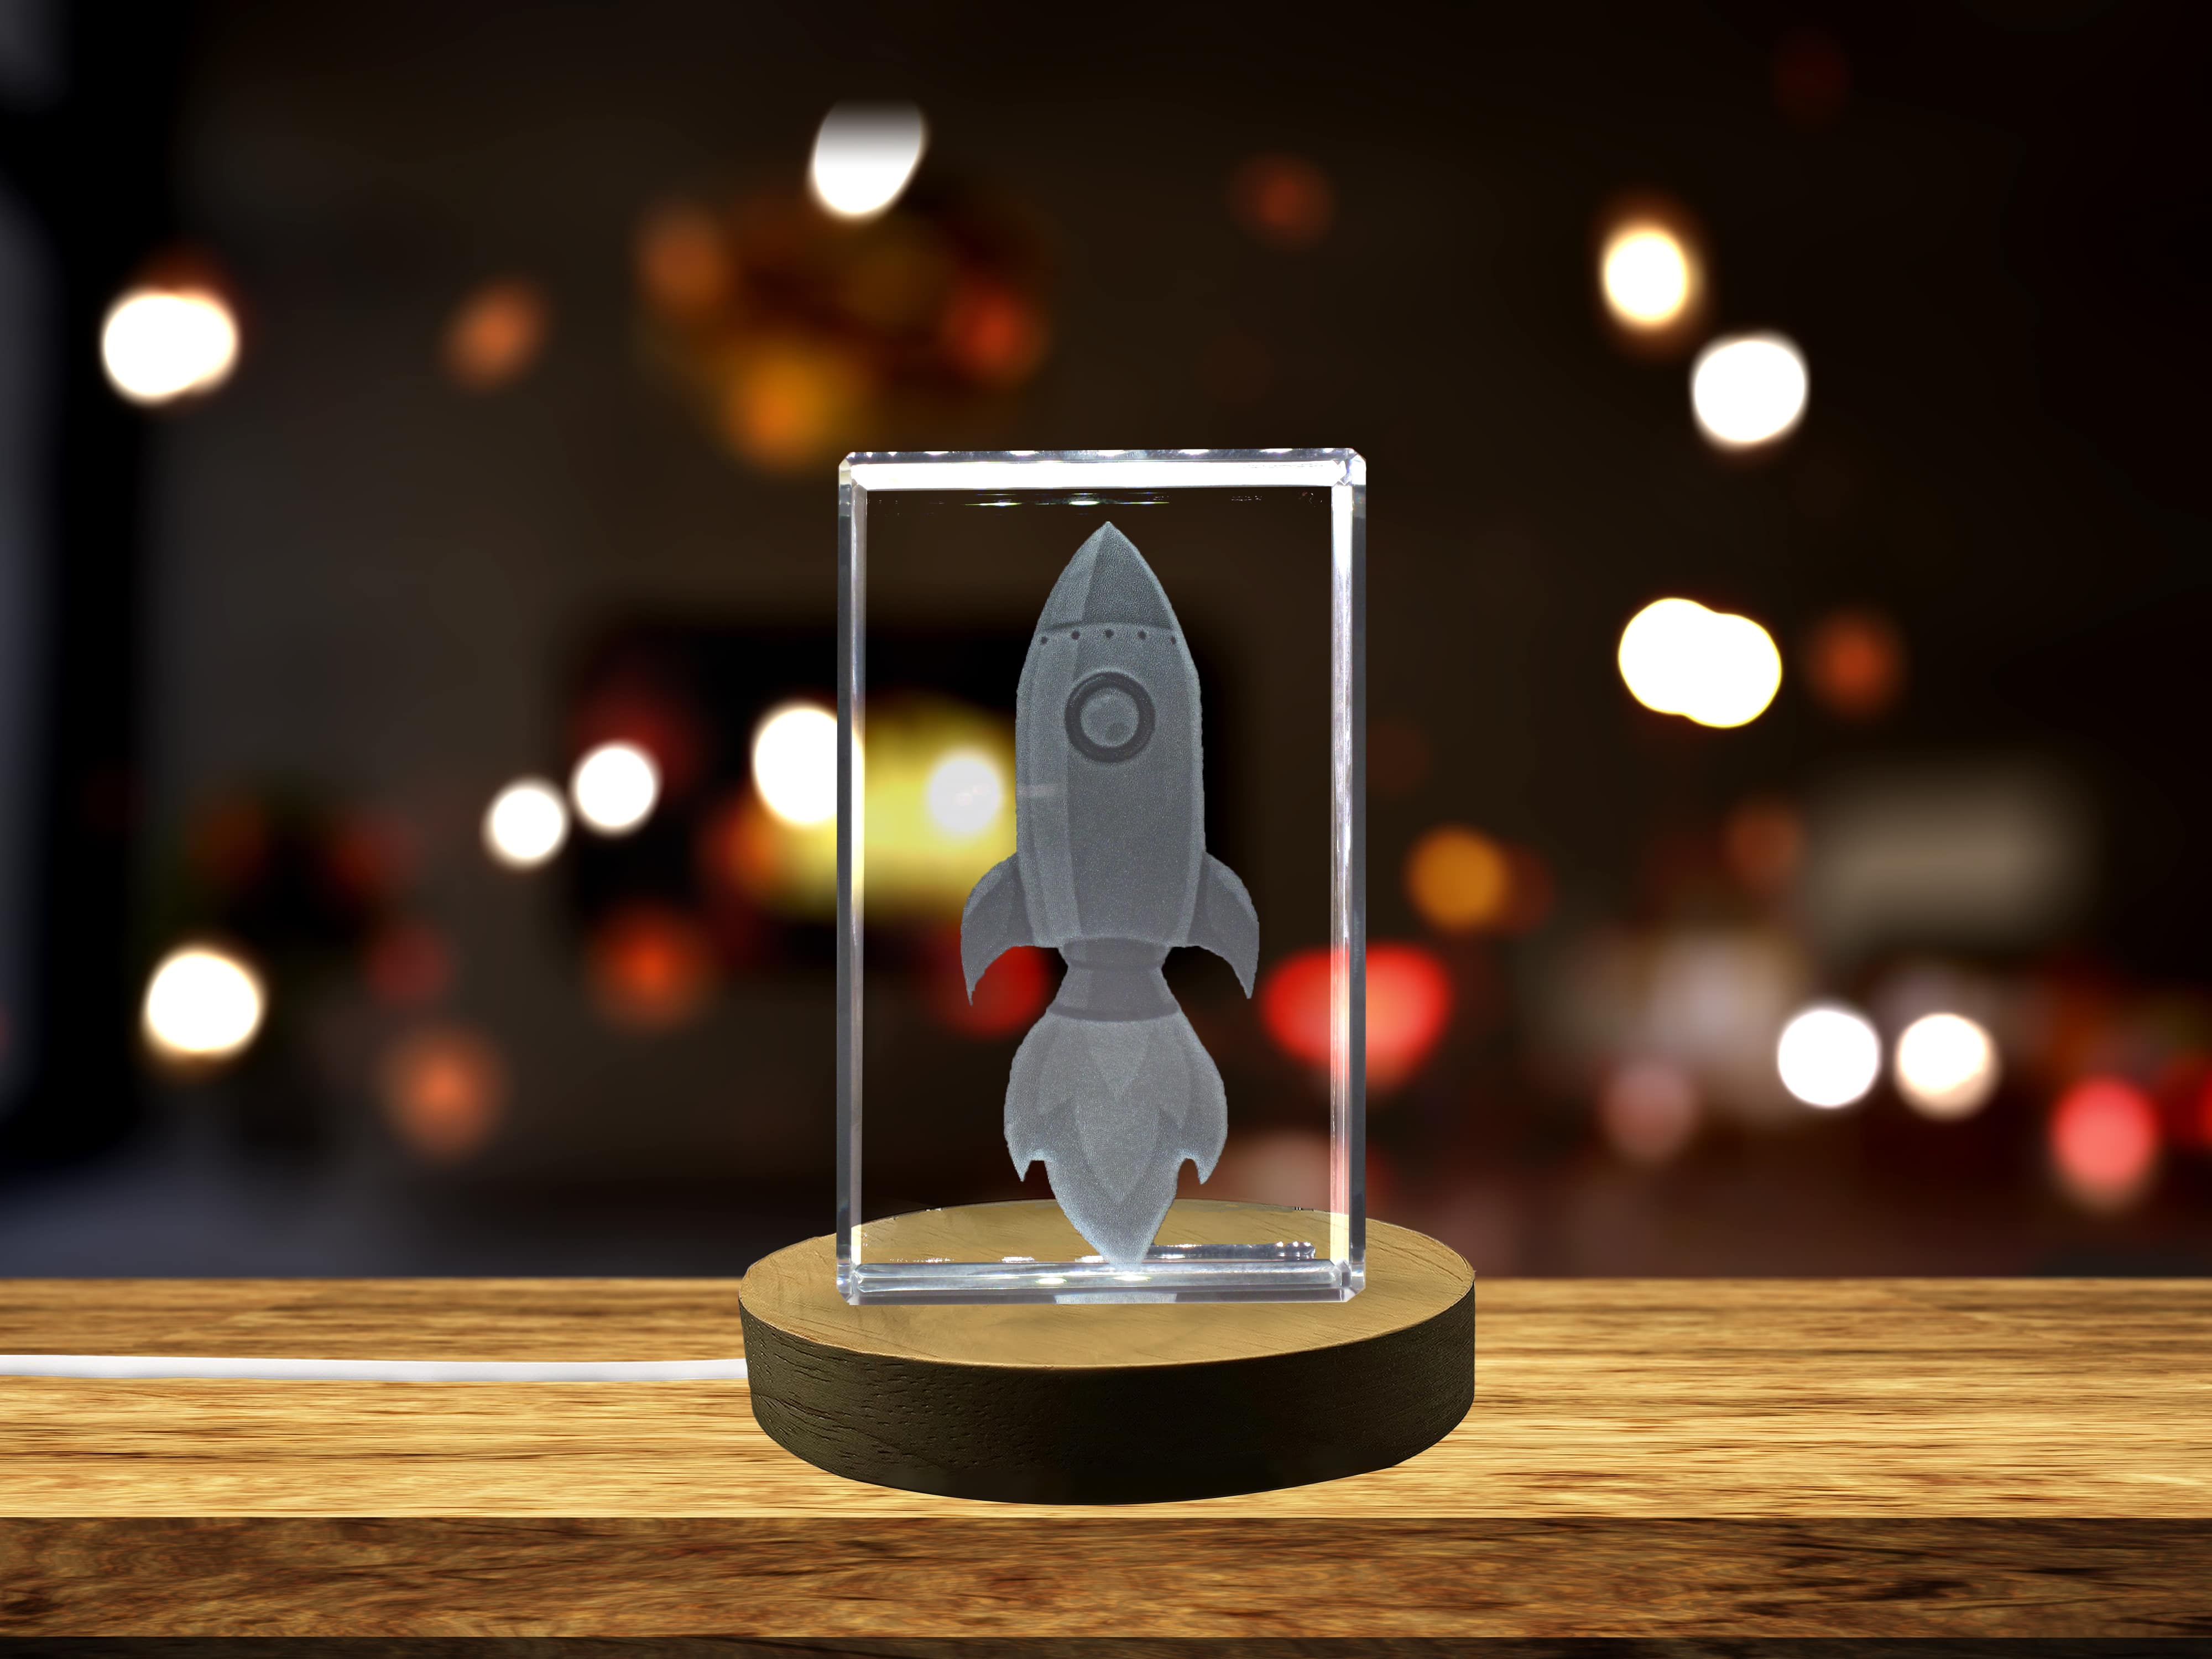 Rocket Space Ship 3D Engraved Crystal 3D Engraved Crystal Keepsake/Gift/Decor/Collectible/Souvenir A&B Crystal Collection